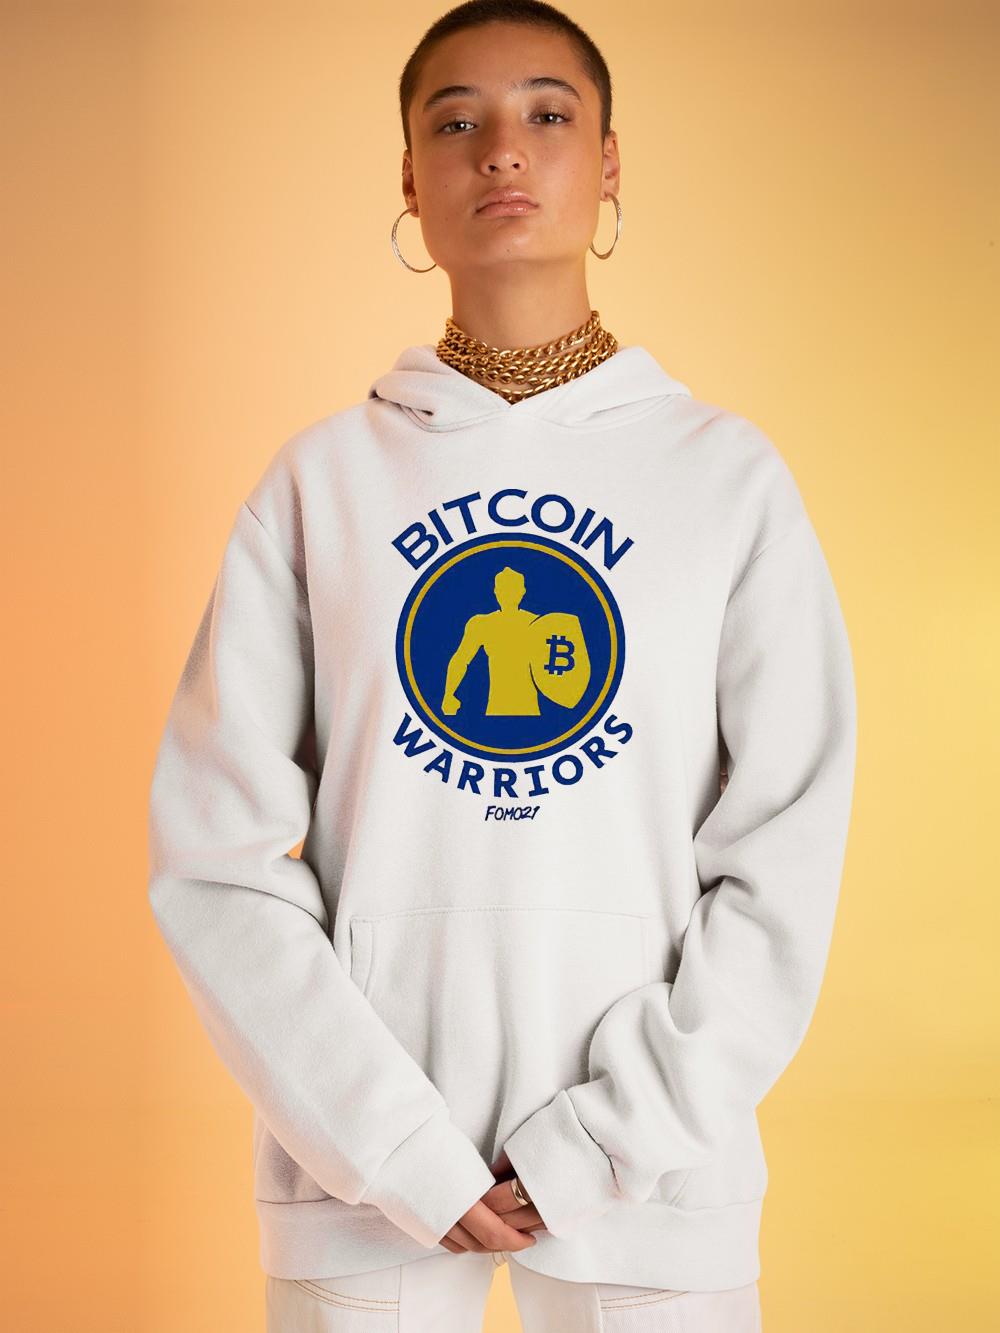 Bitcoin Warriors shirt